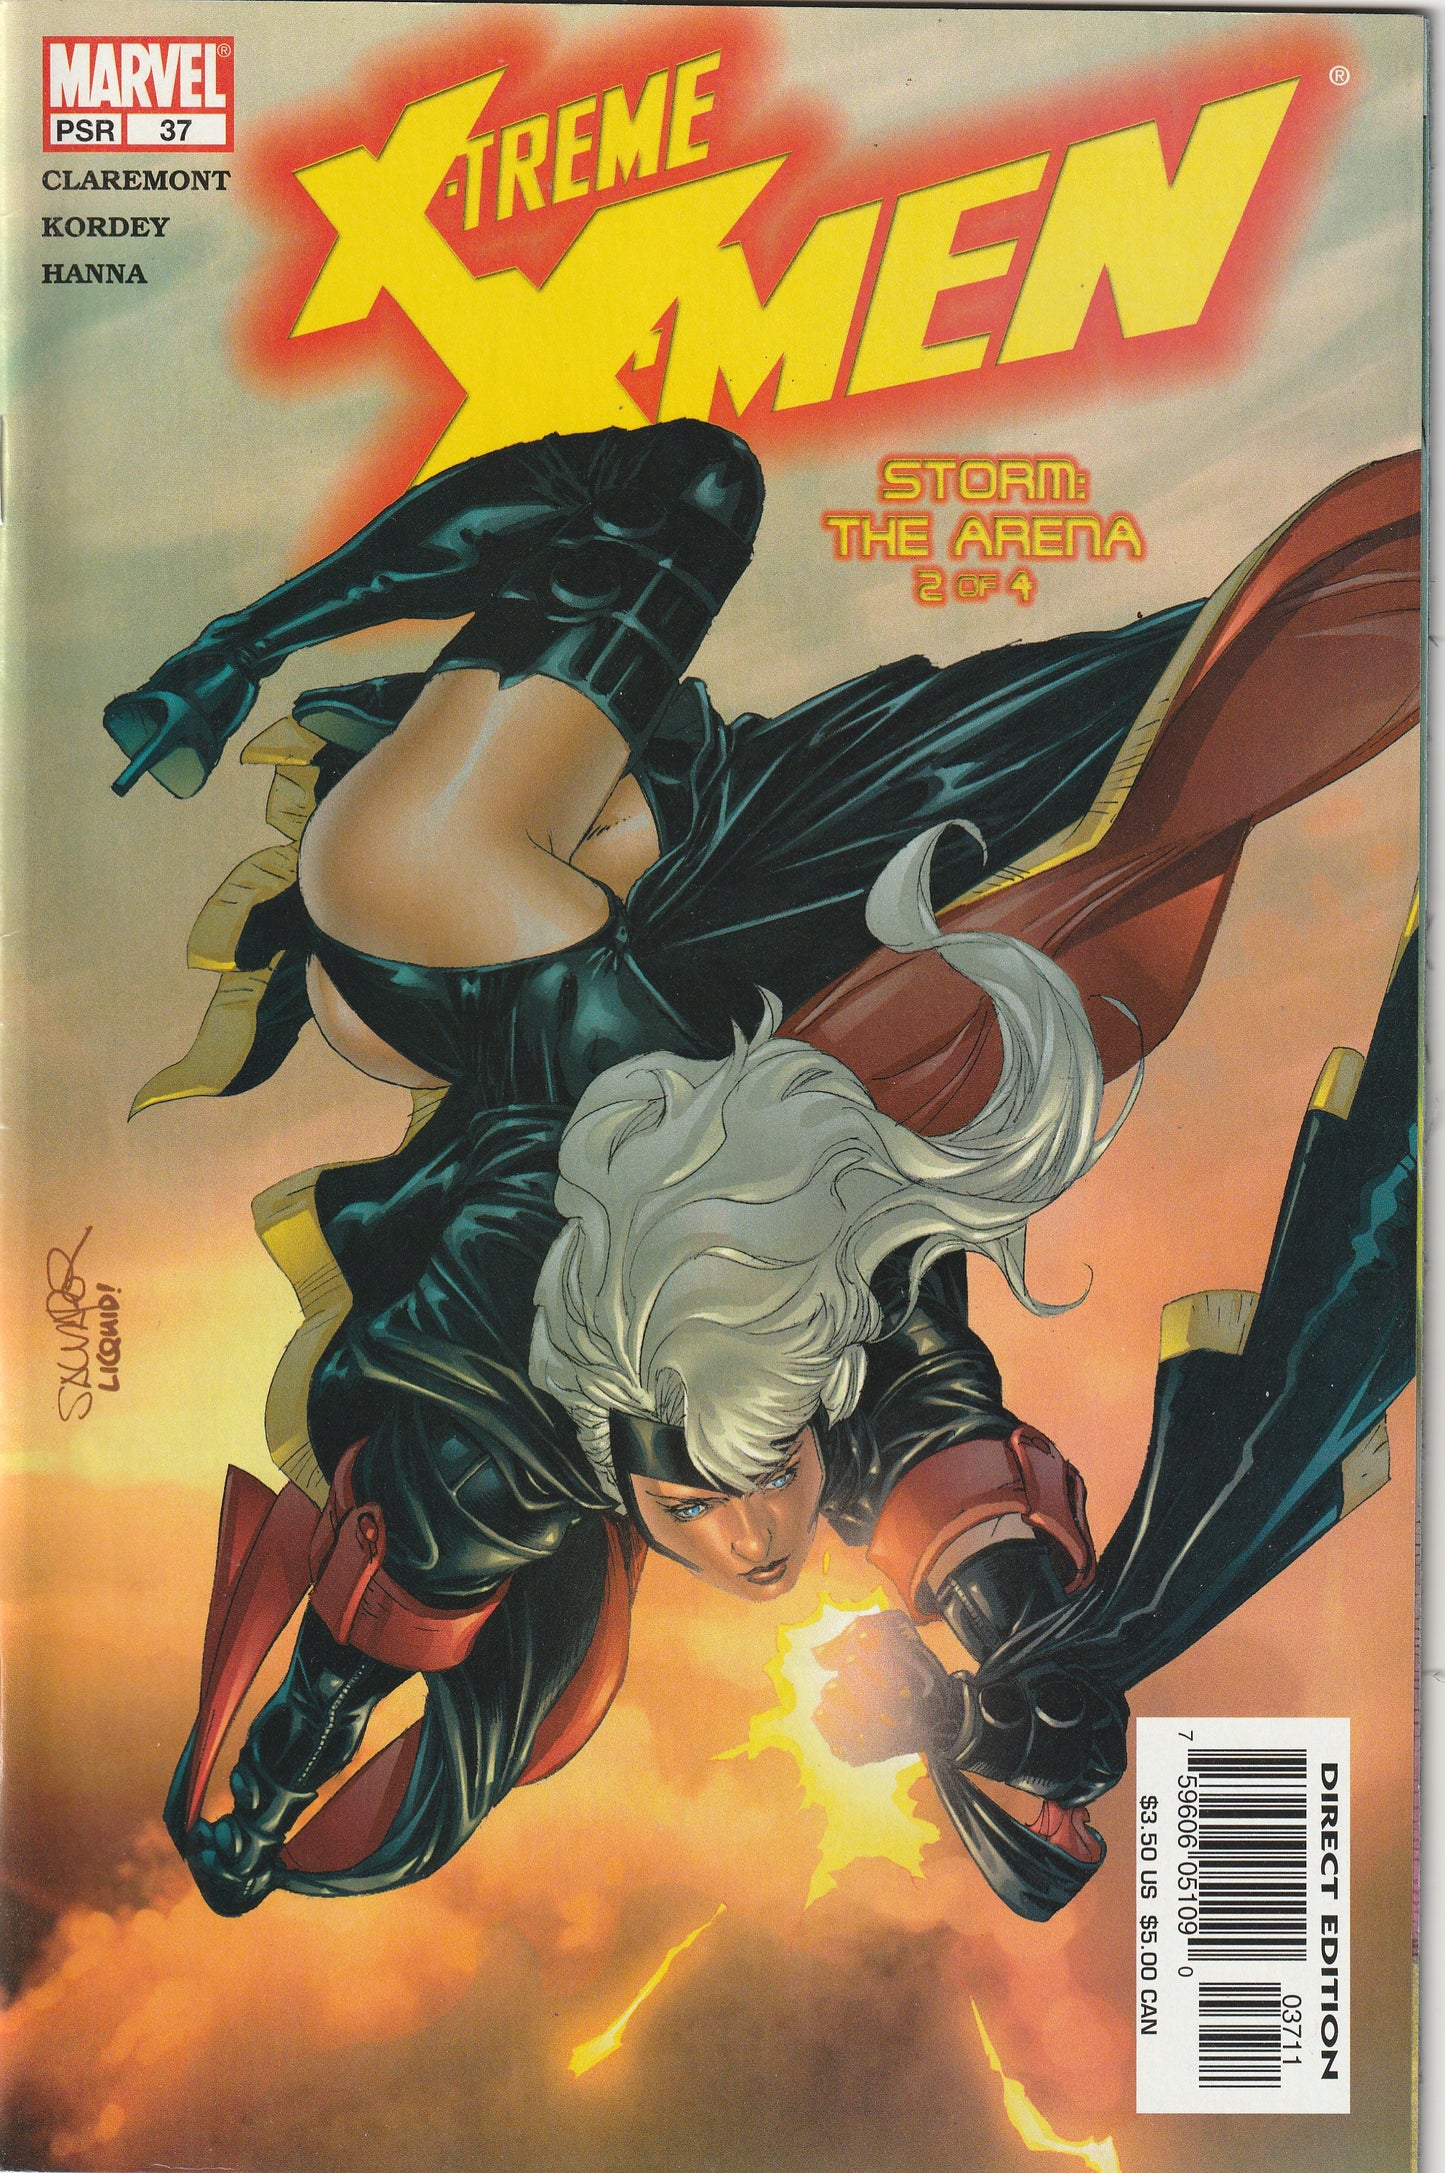 X-Treme X-Men #37 (2004) - Storm